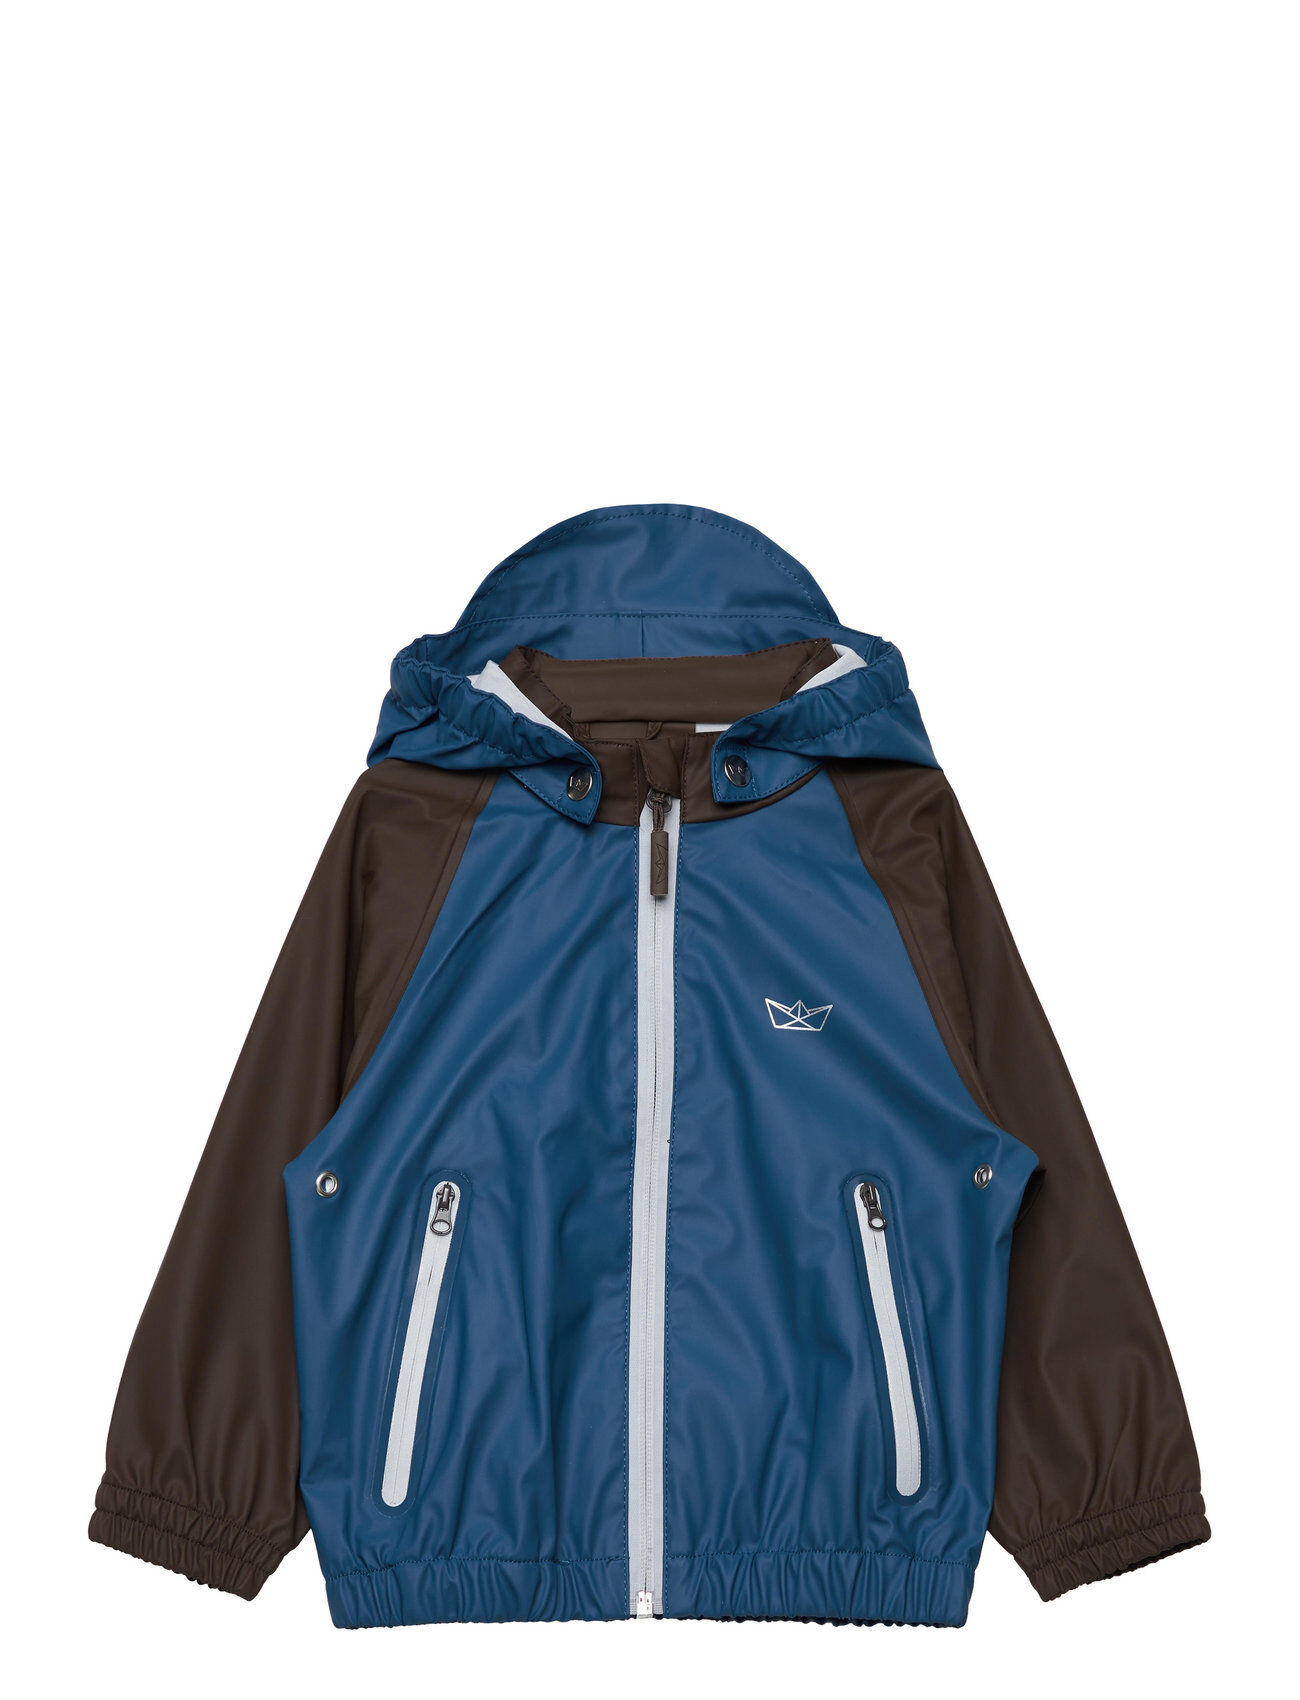 SWAYS Crew Jacket Outerwear Rainwear Jackets Blå SWAYS